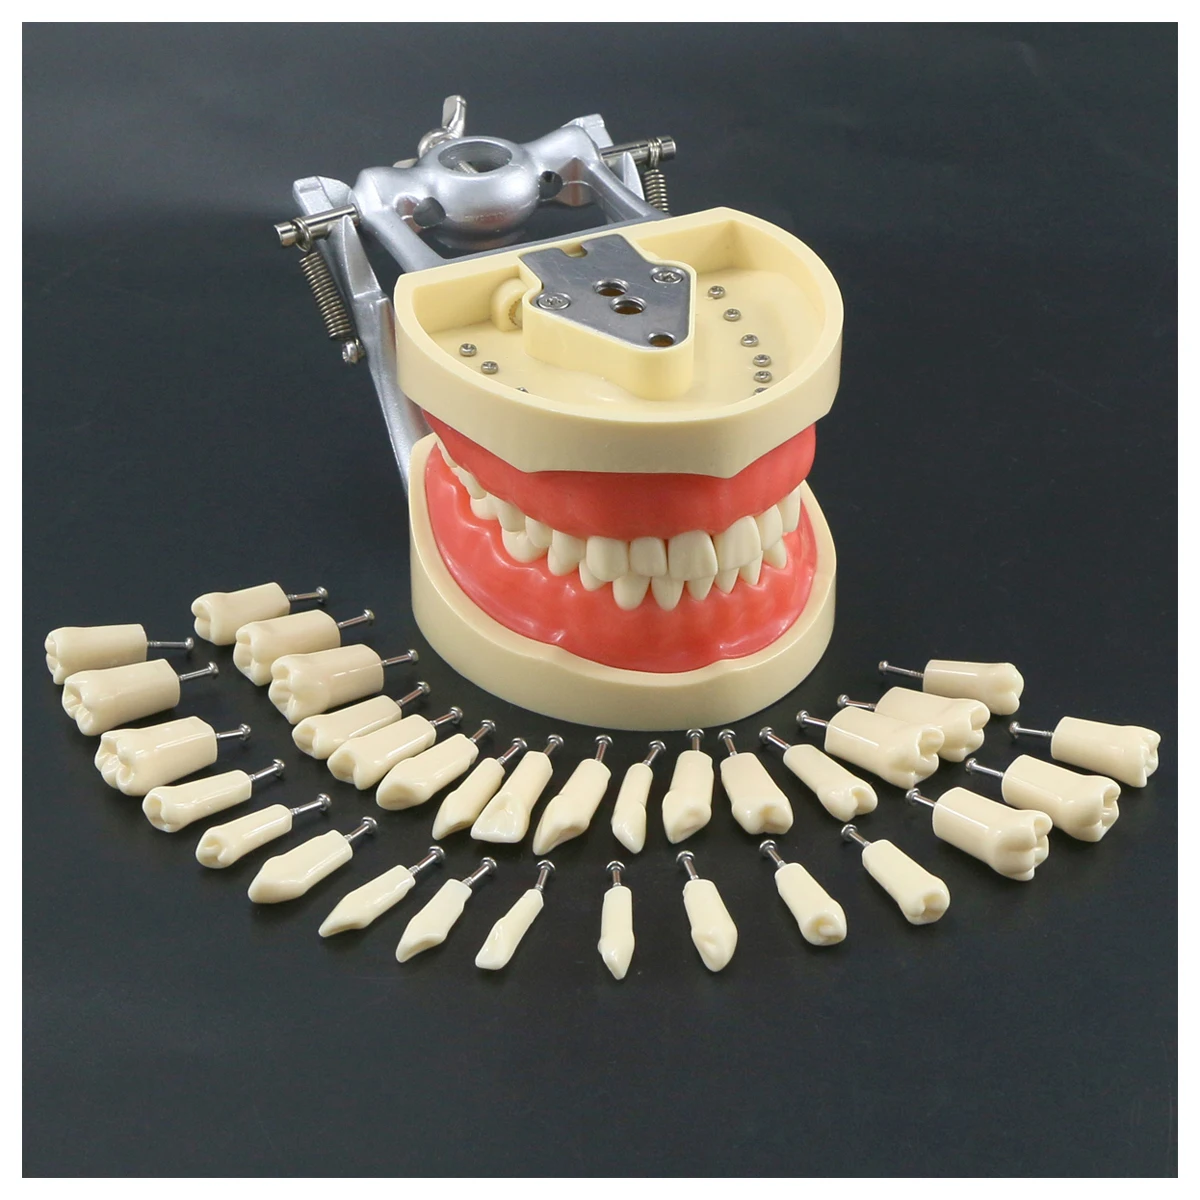 Dental Typodont Model With Removable Screw-in Teeth Kilgore NISSIN 200 Type 8012 32 Teeth